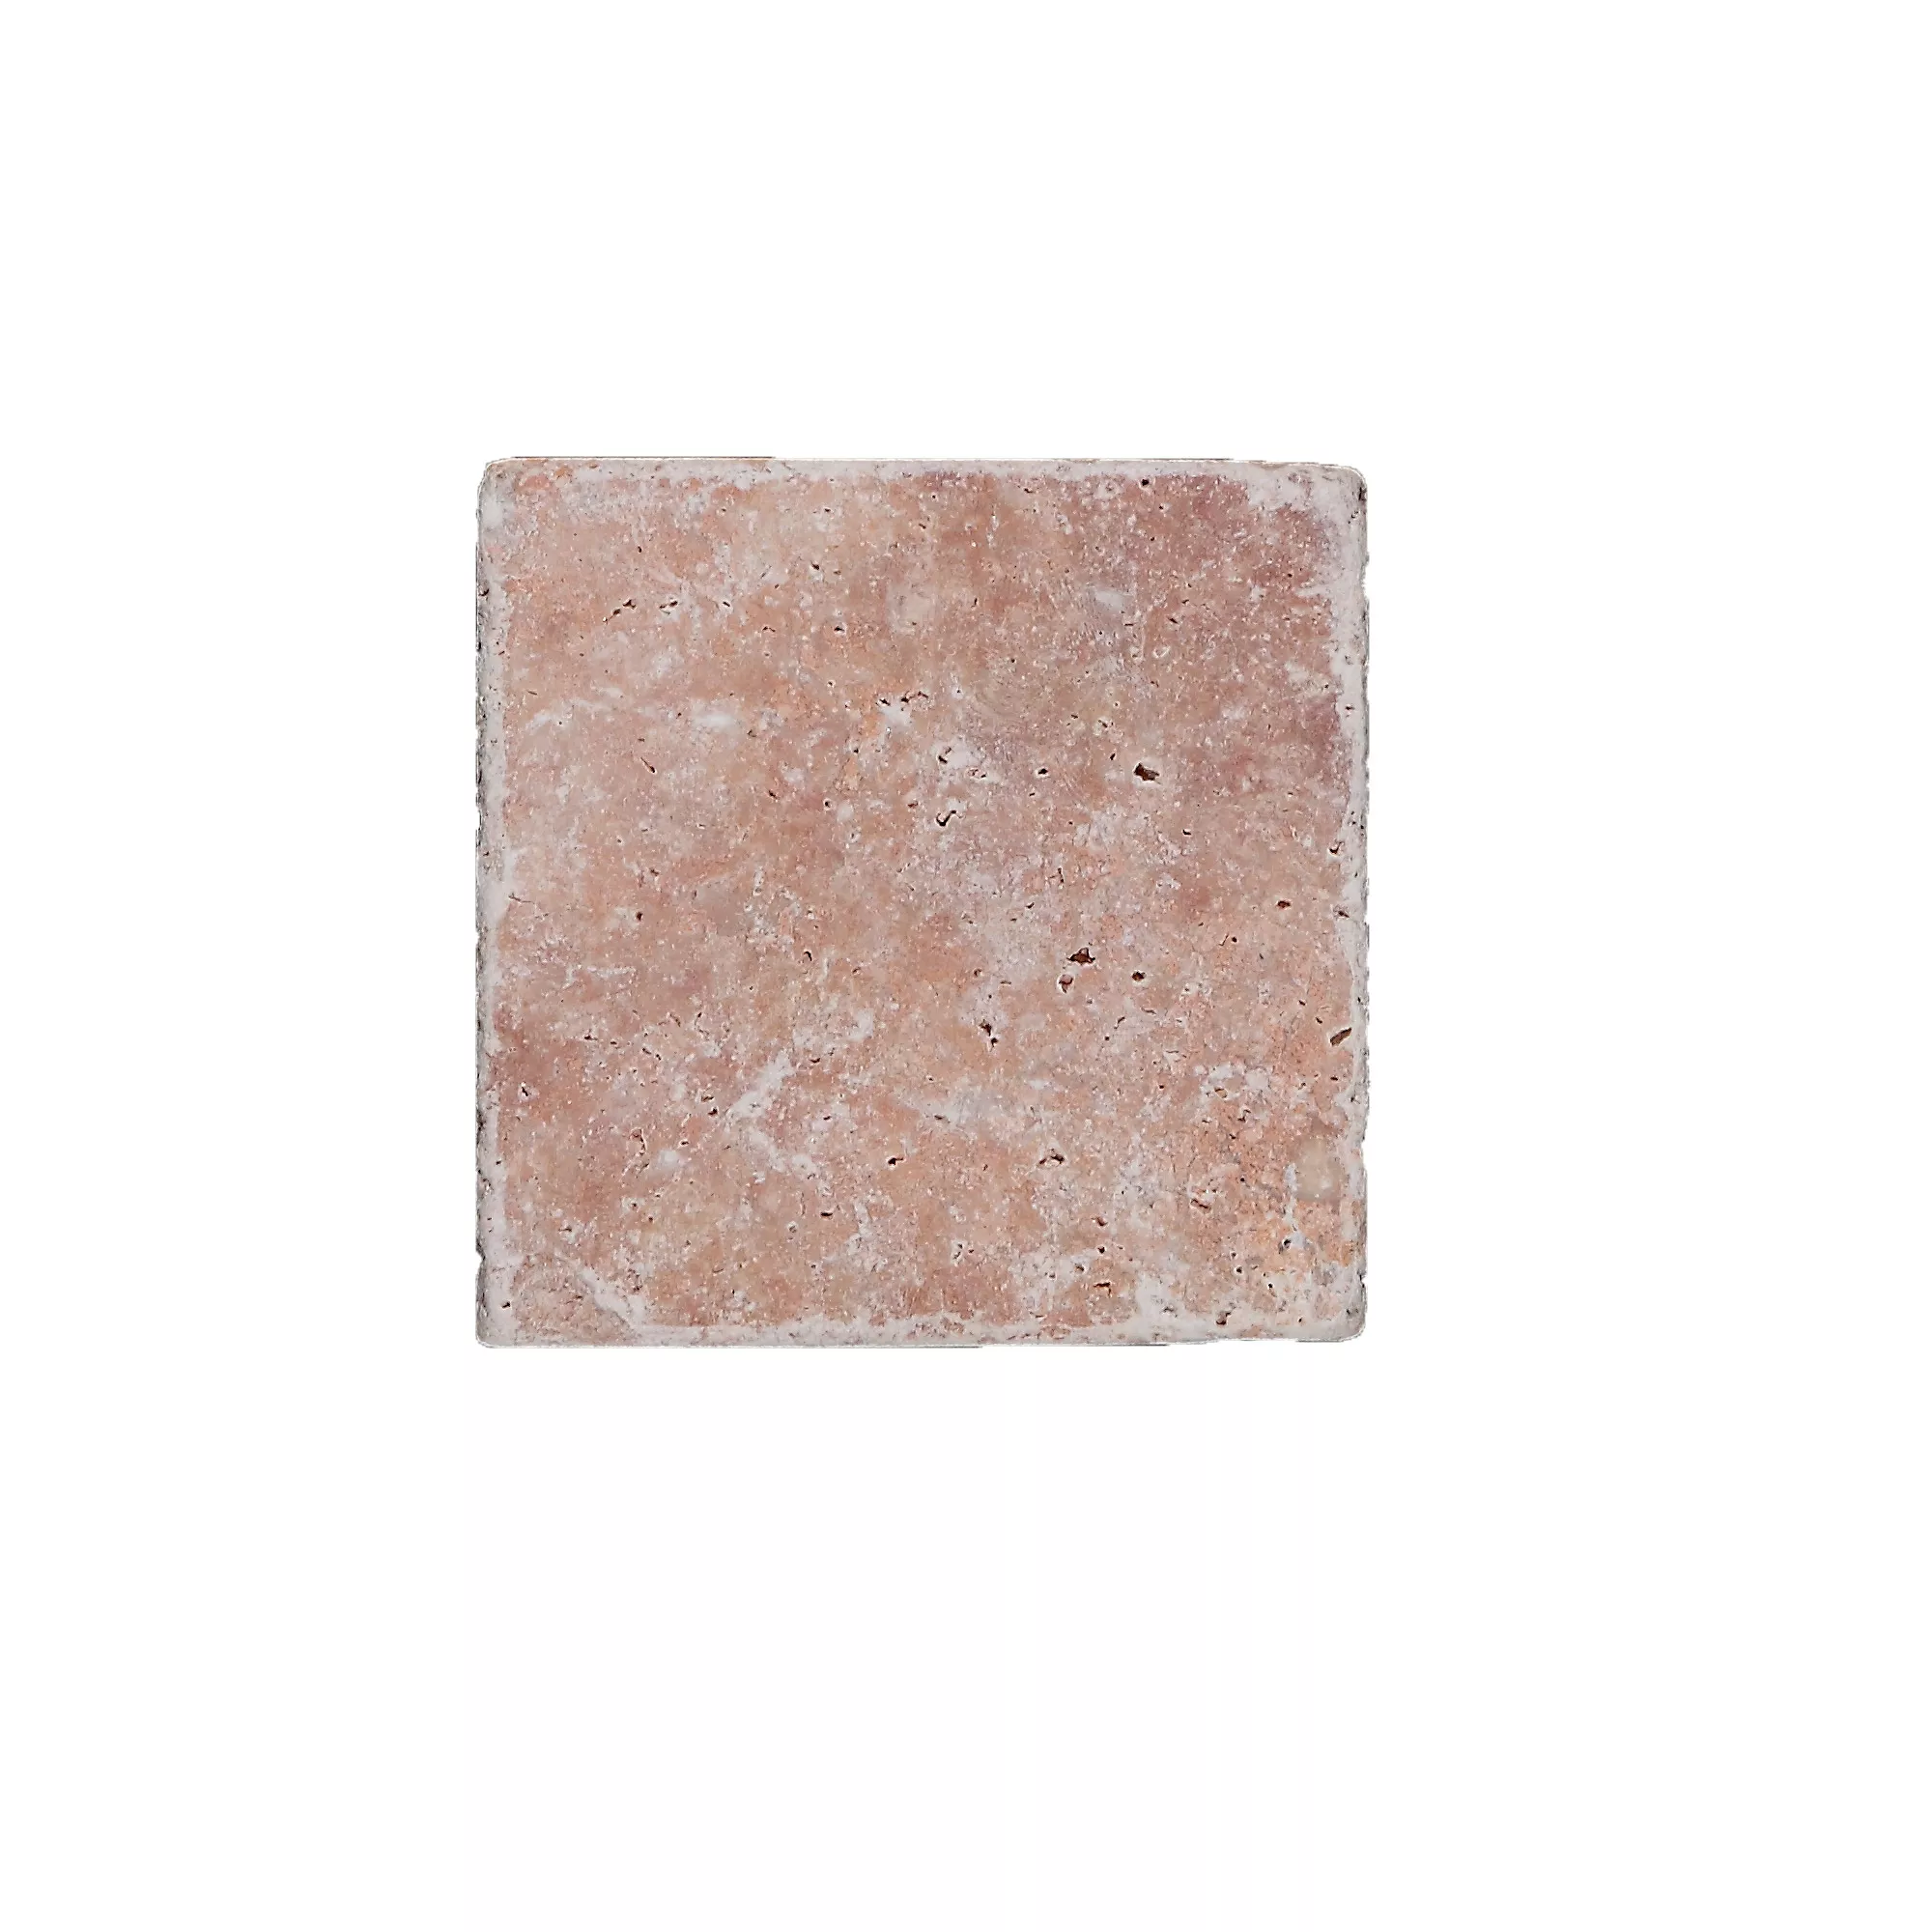 Natural Stone Tiles Travertine Usantos Rosso 10x10cm